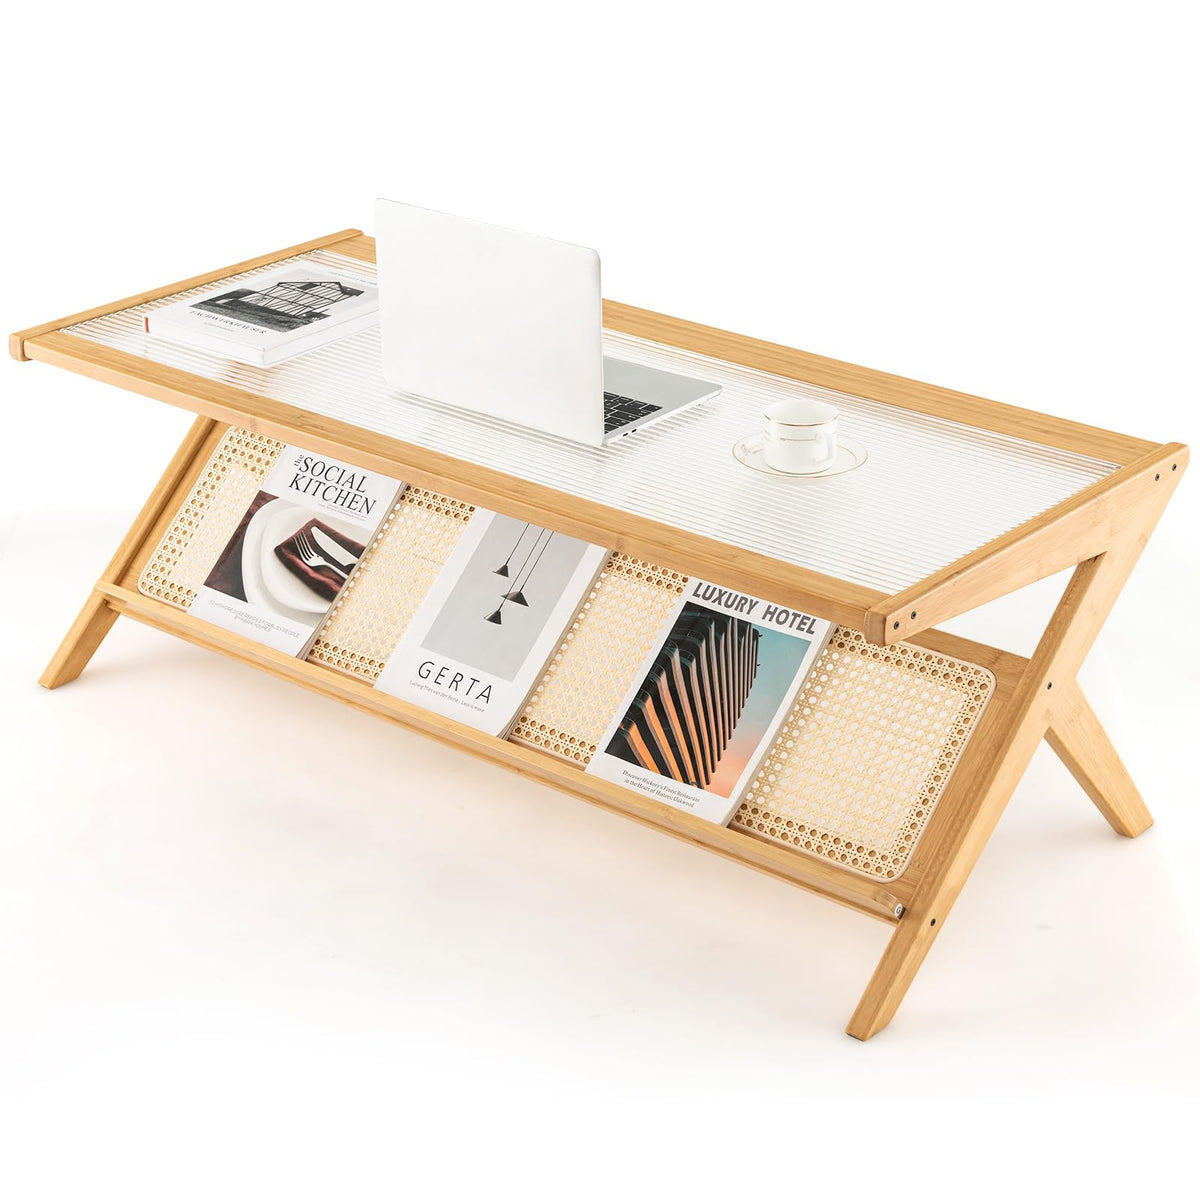 Giantex Bamboo Coffee Table, 120cm 2-Tier Rectangular Coffee Table